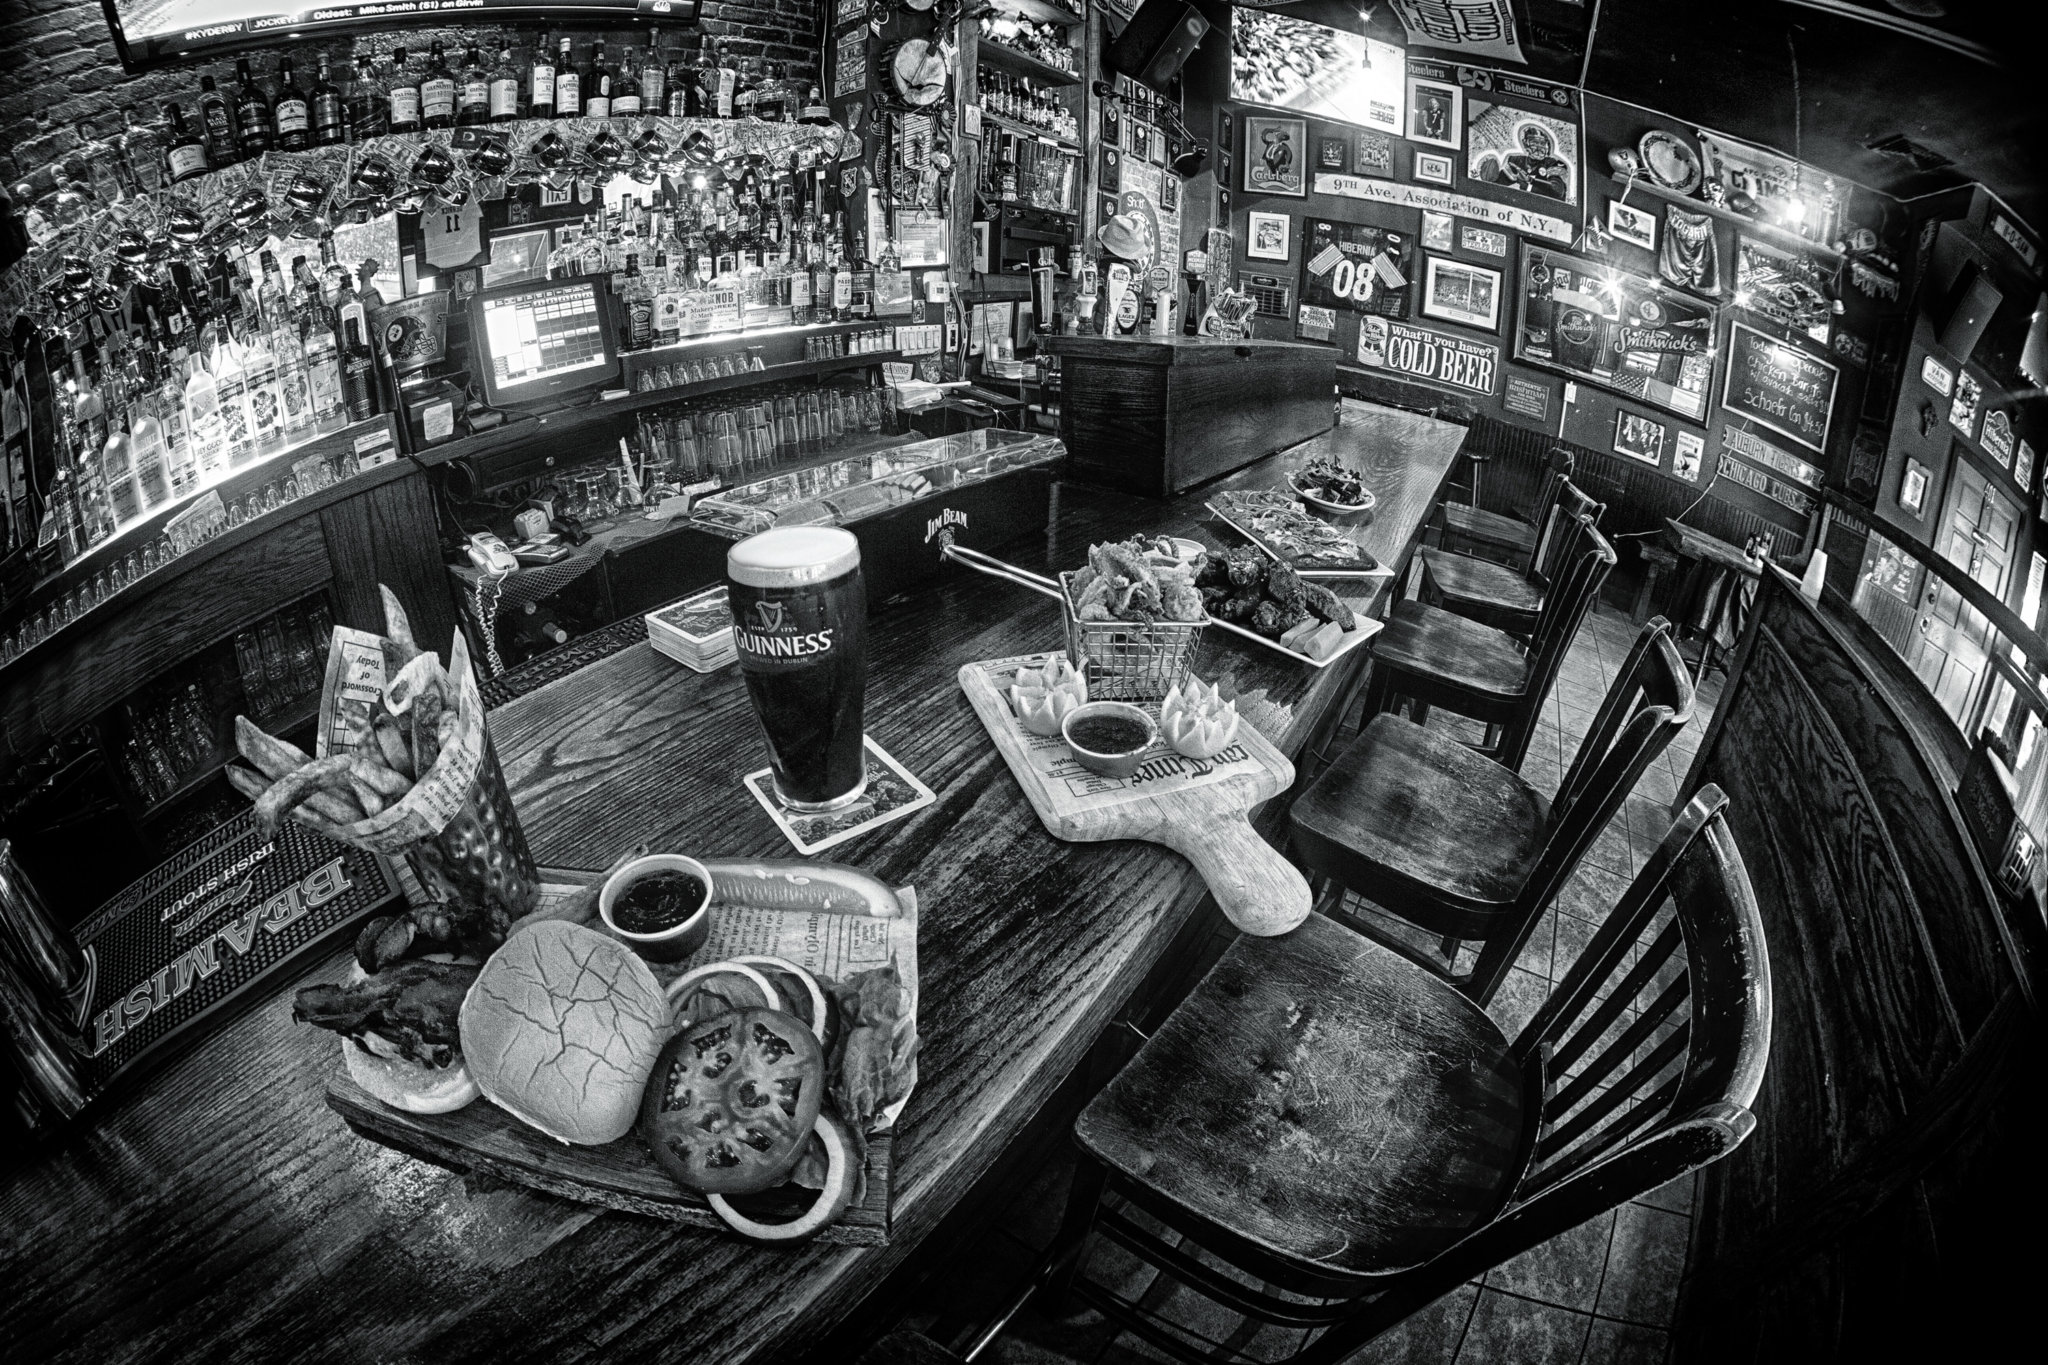 Hell's Kitchen Irish Pub | Hibernia Bar | New York City ...